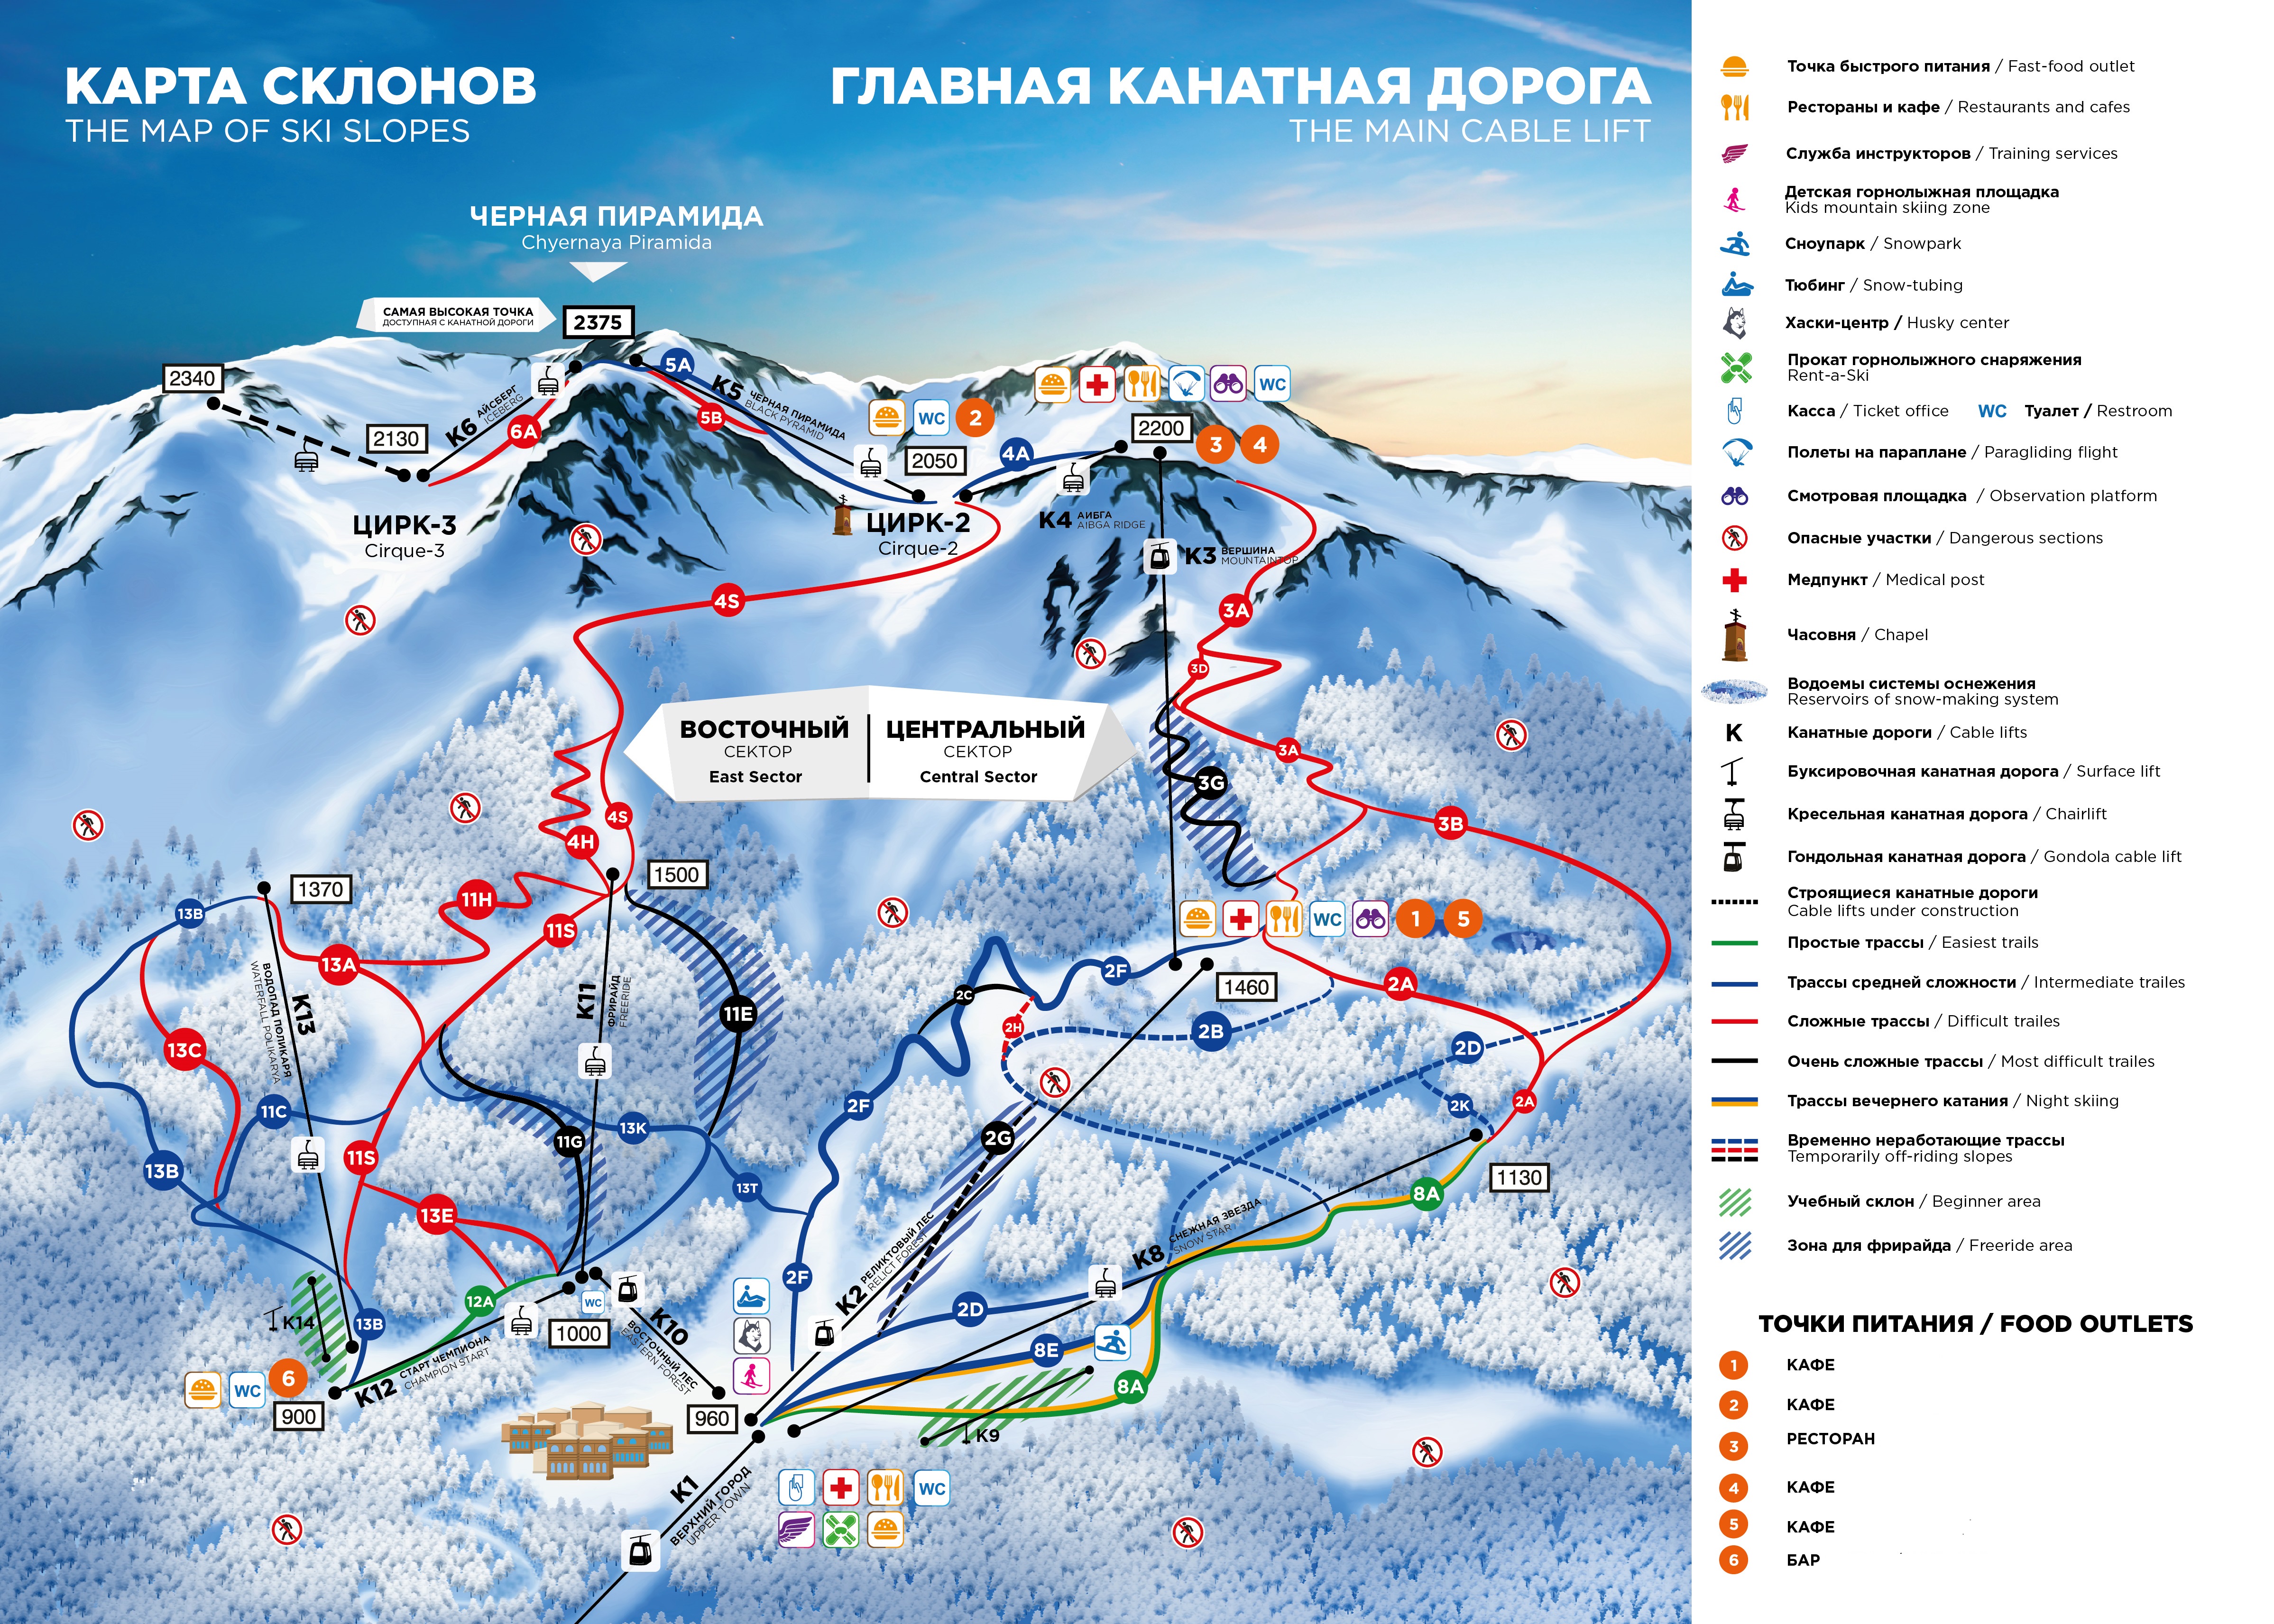  Business ski slopes of the resort plan